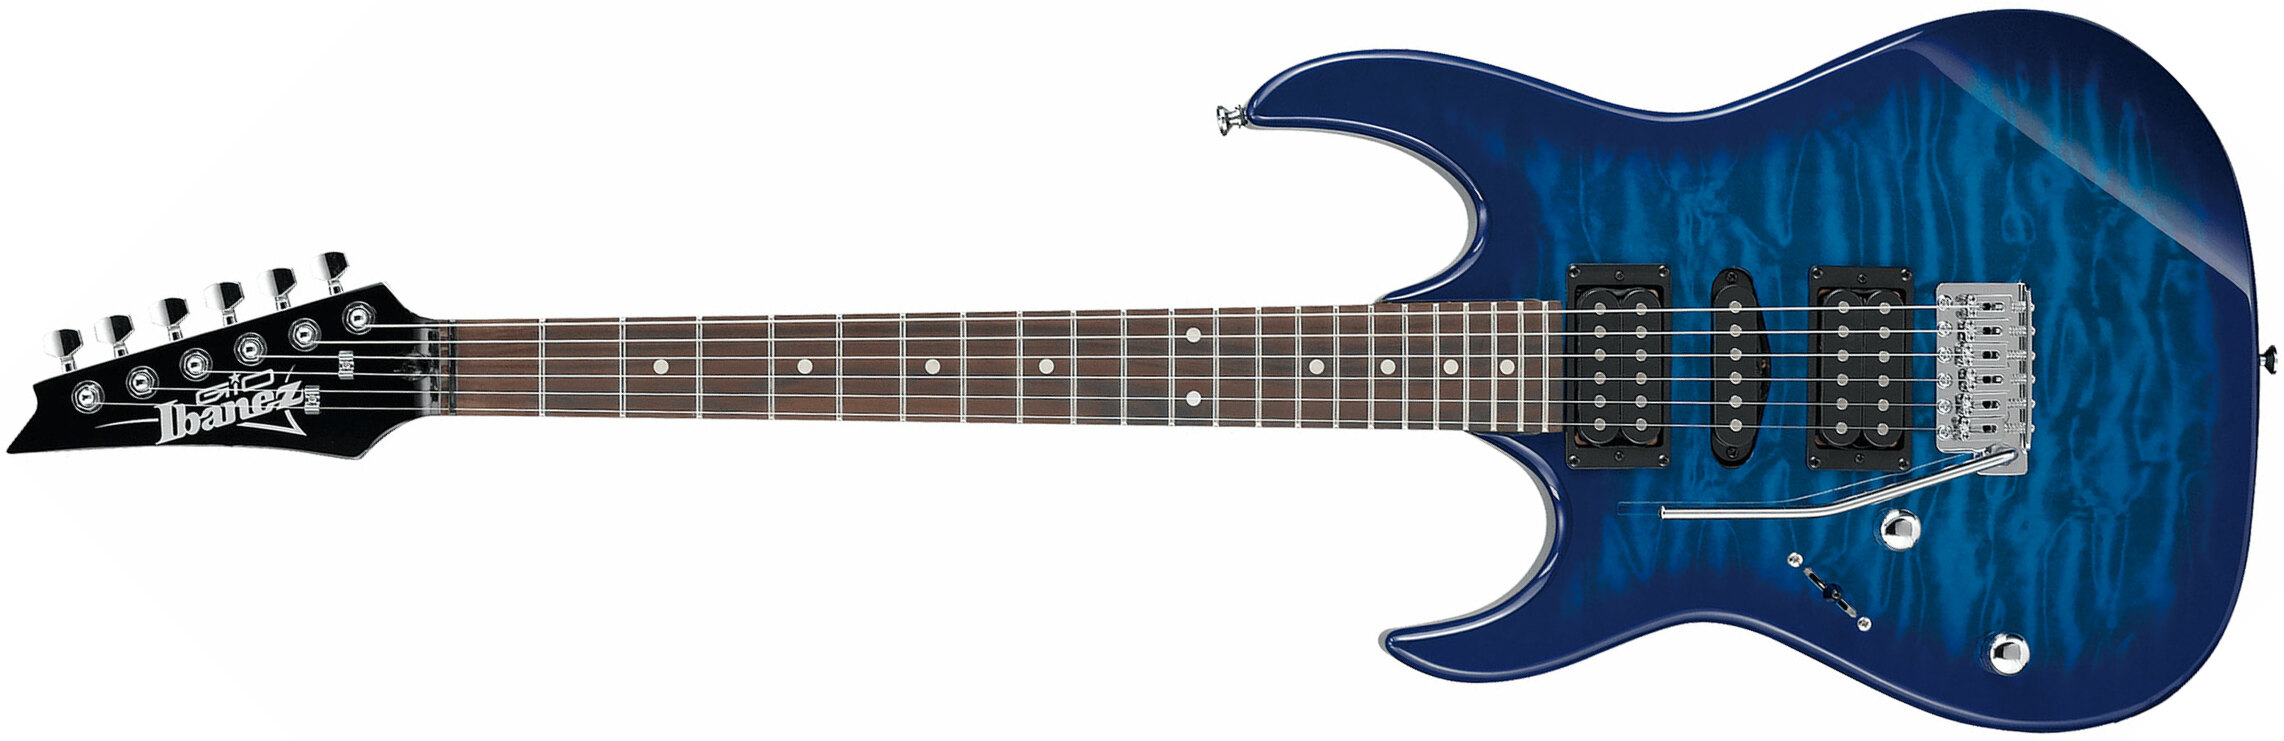 Ibanez Grx70qal Tbb Lh Gaucher Gio Hsh Trem Jat - Transparent Blue Burst - Left-handed electric guitar - Main picture